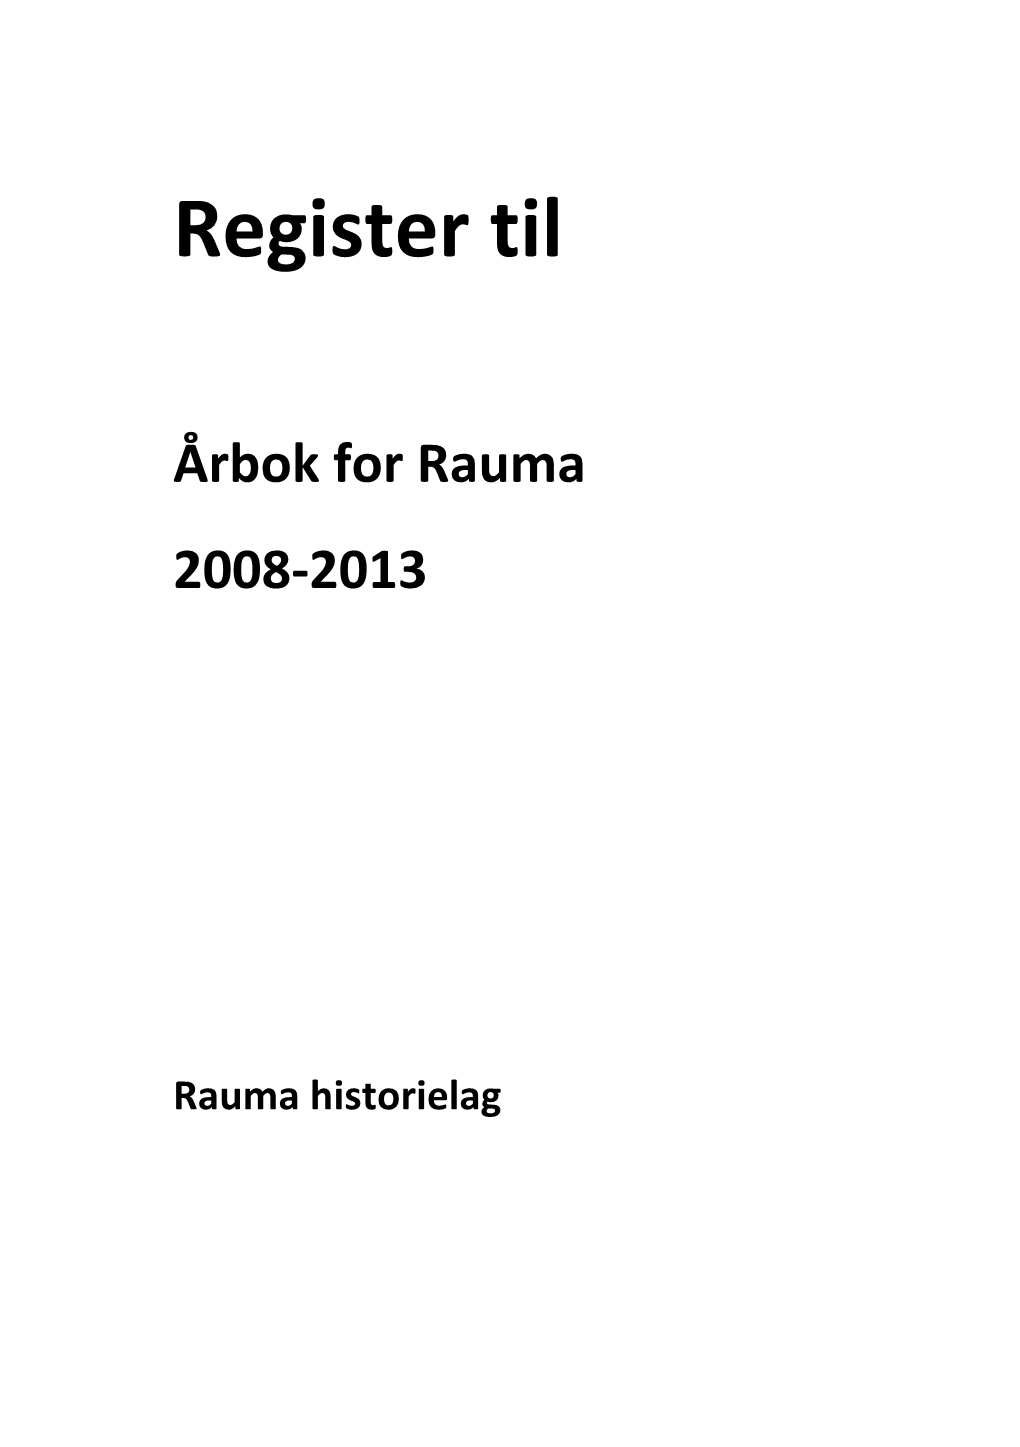 Register Til Årbok for Rauma